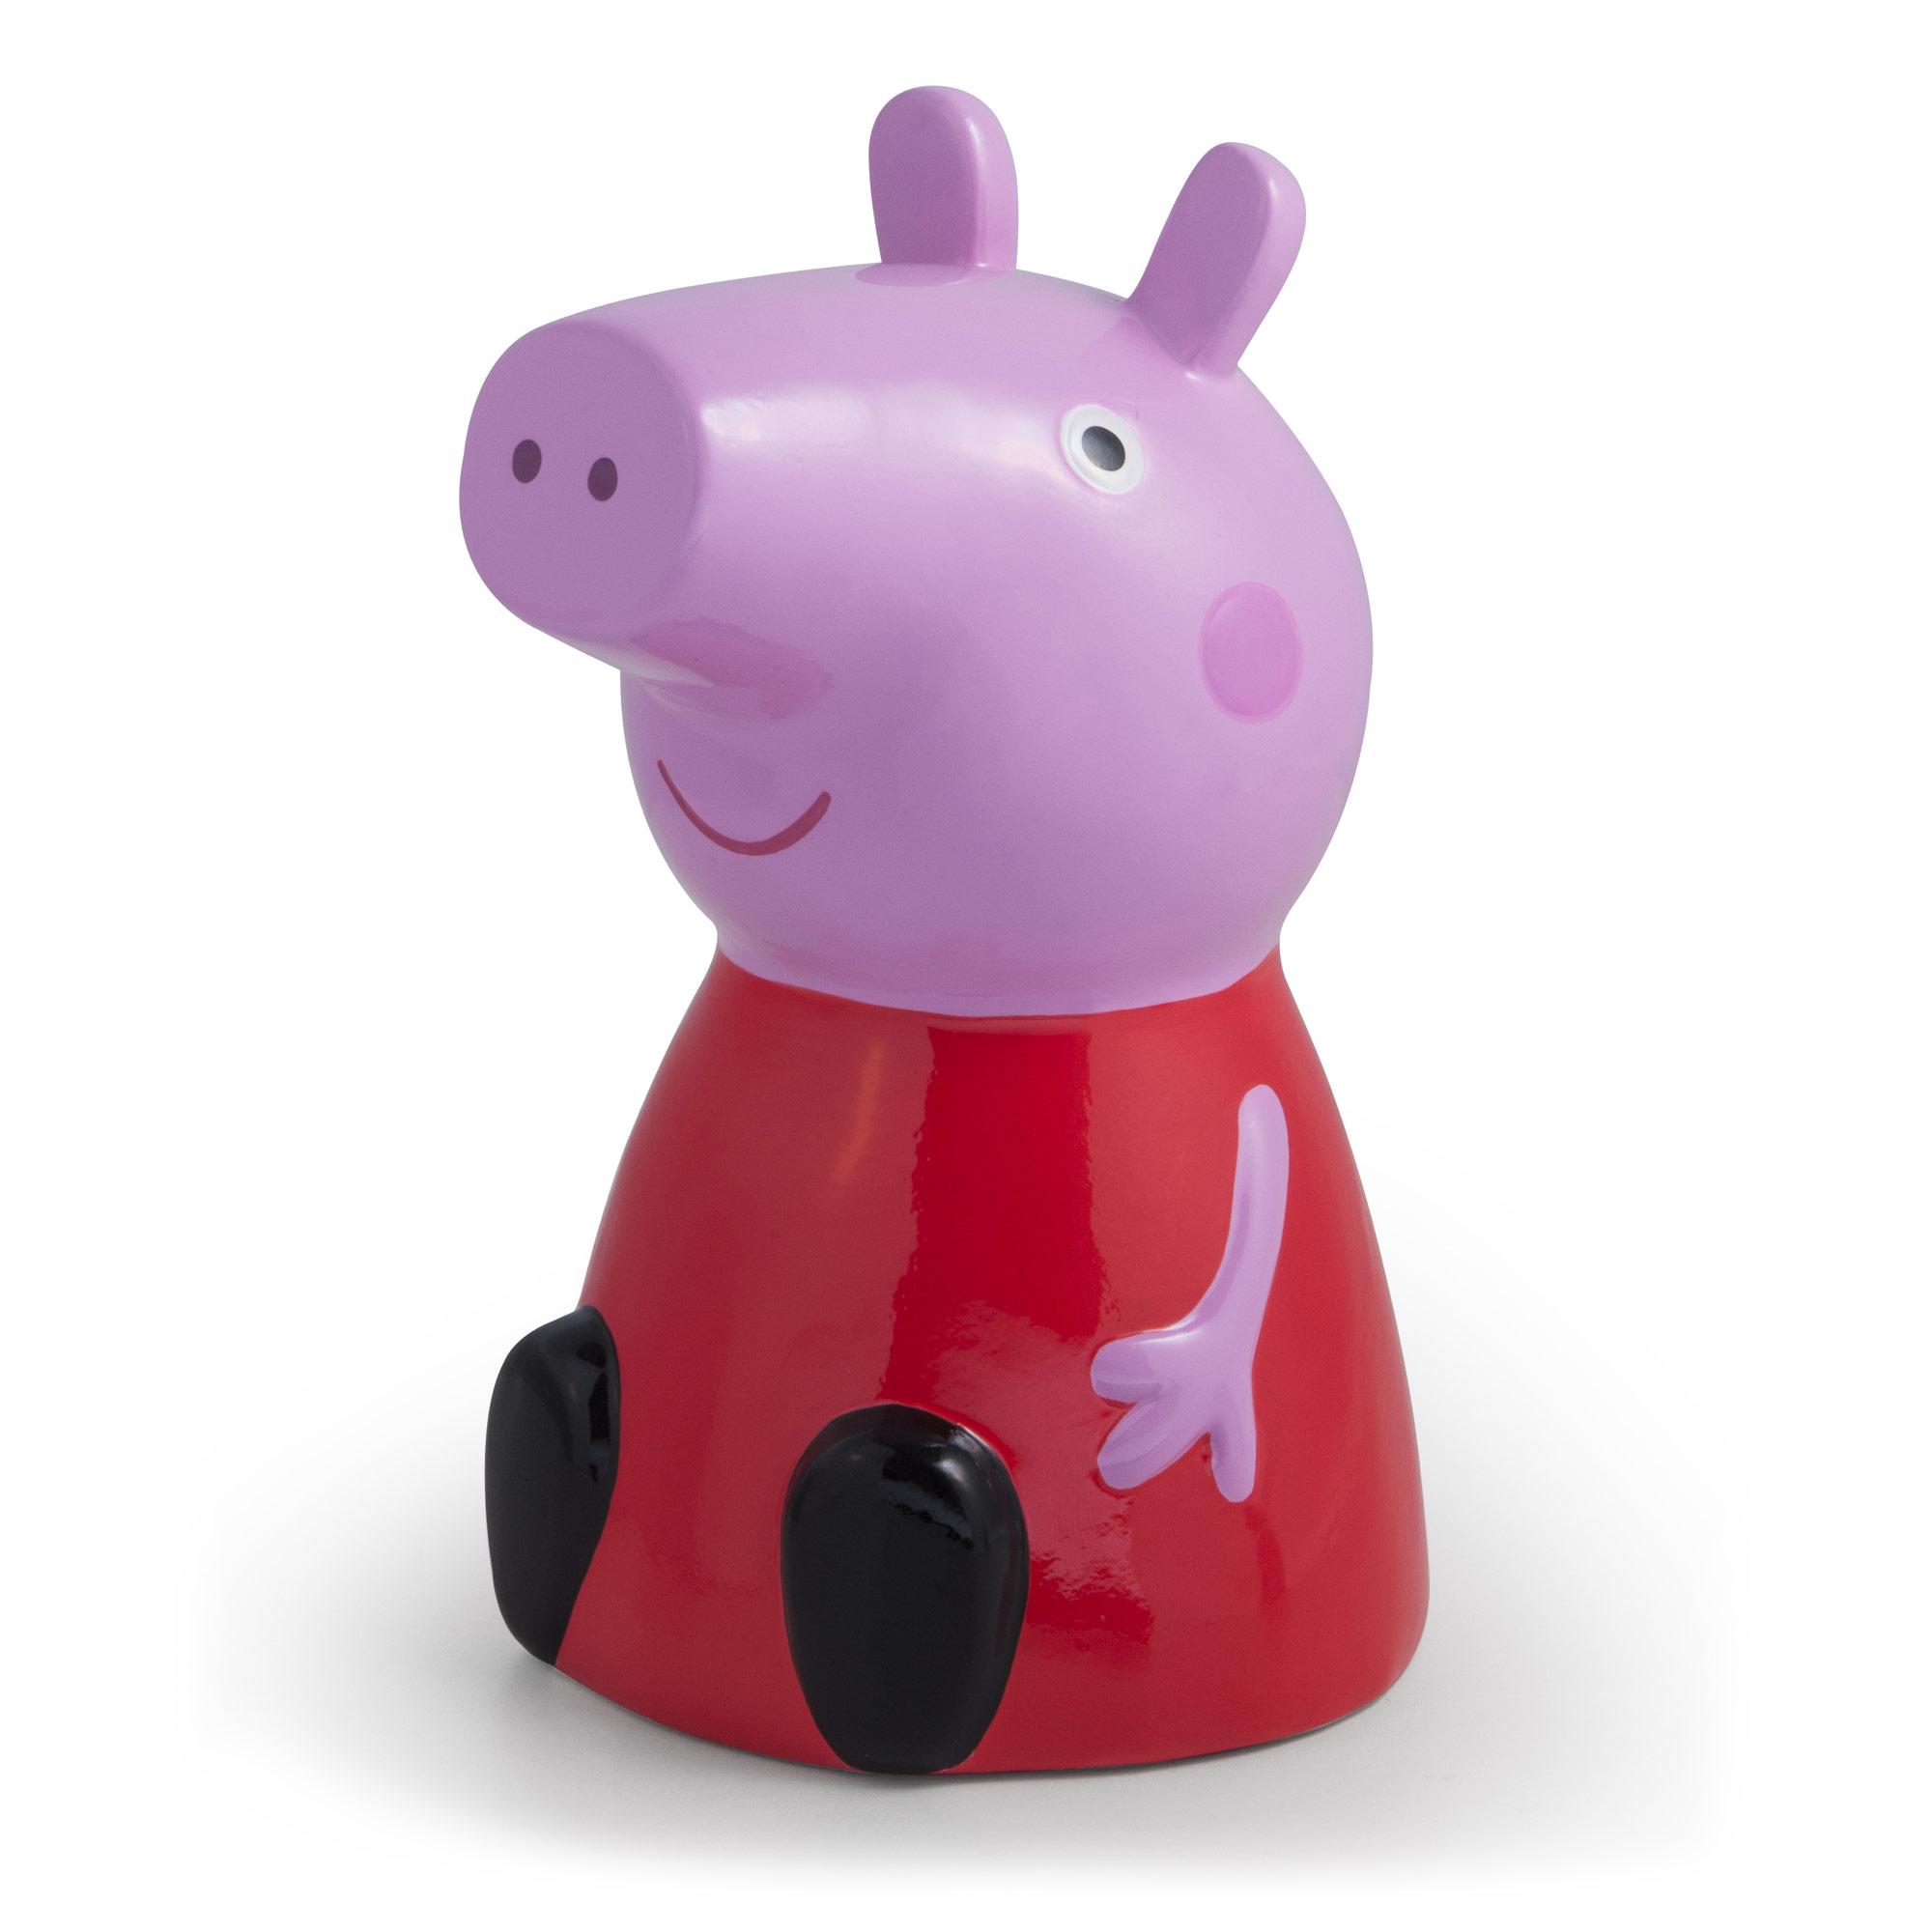 Peppa Pig Ceramic Money Box - £10.00 - Hamleys for Toys and Games